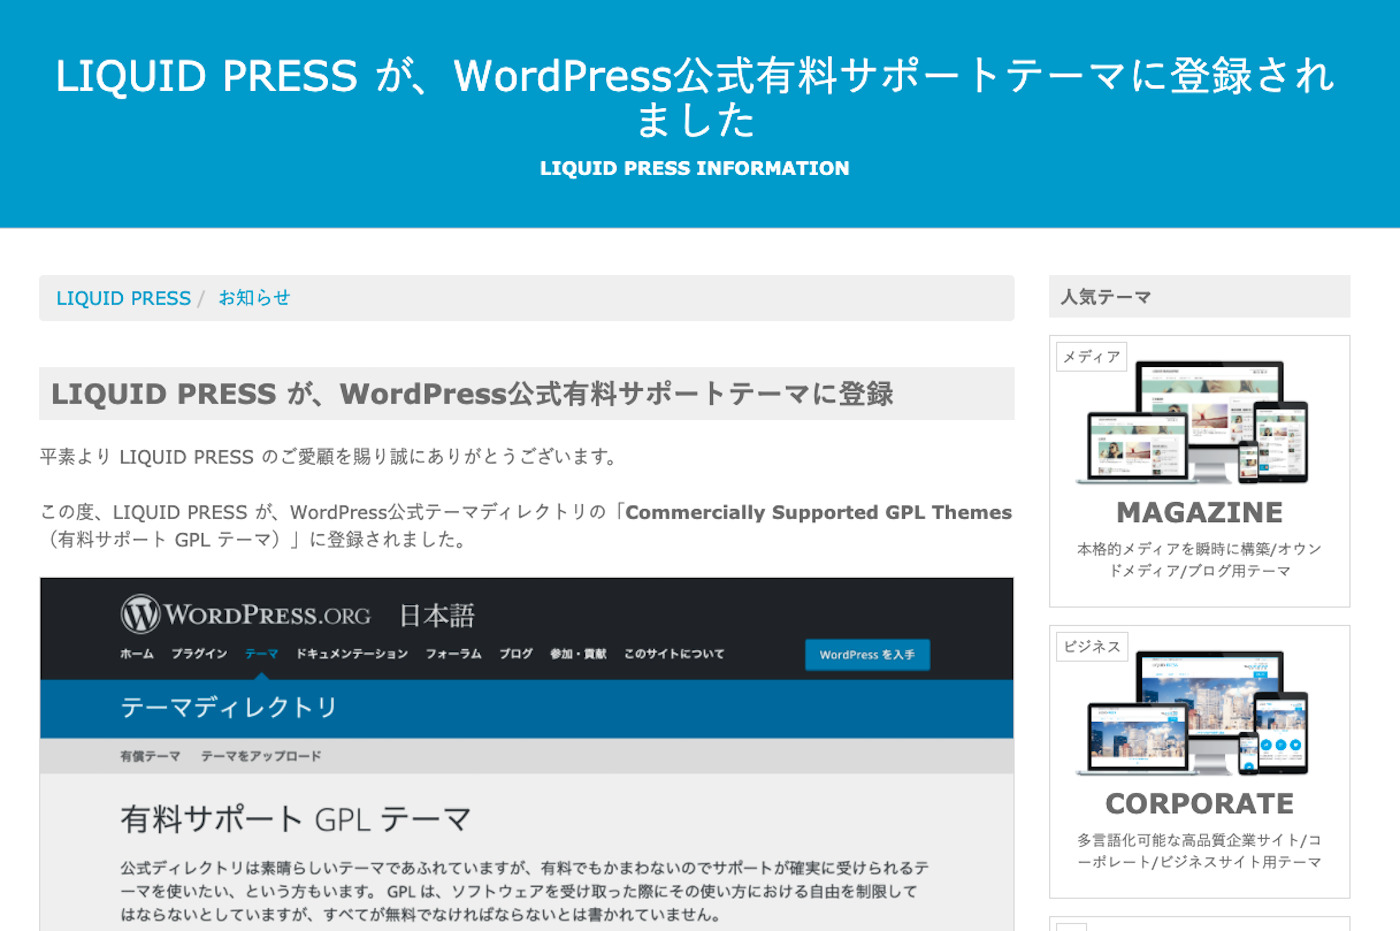 LIQUID PRESS が、WordPress公式有料サポートテーマに登録されました